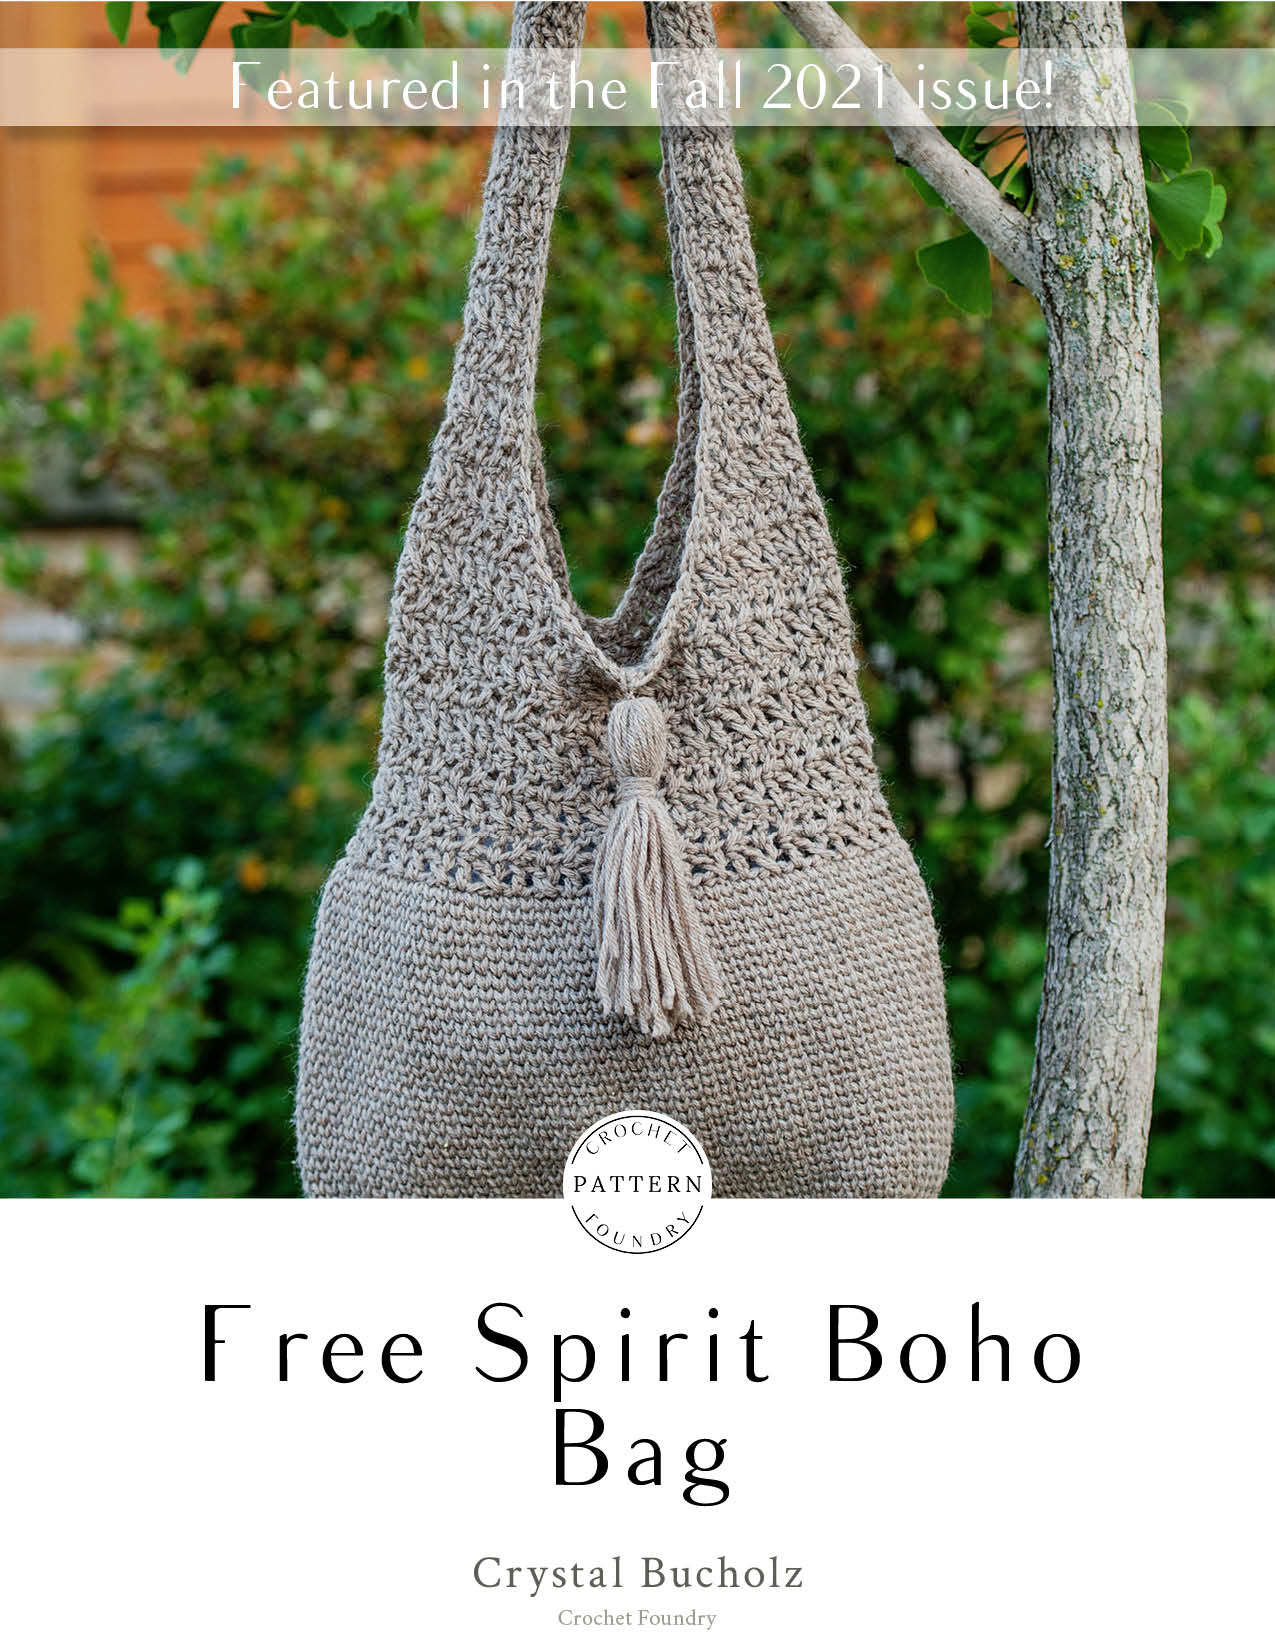 hobo bag pattern pdf free